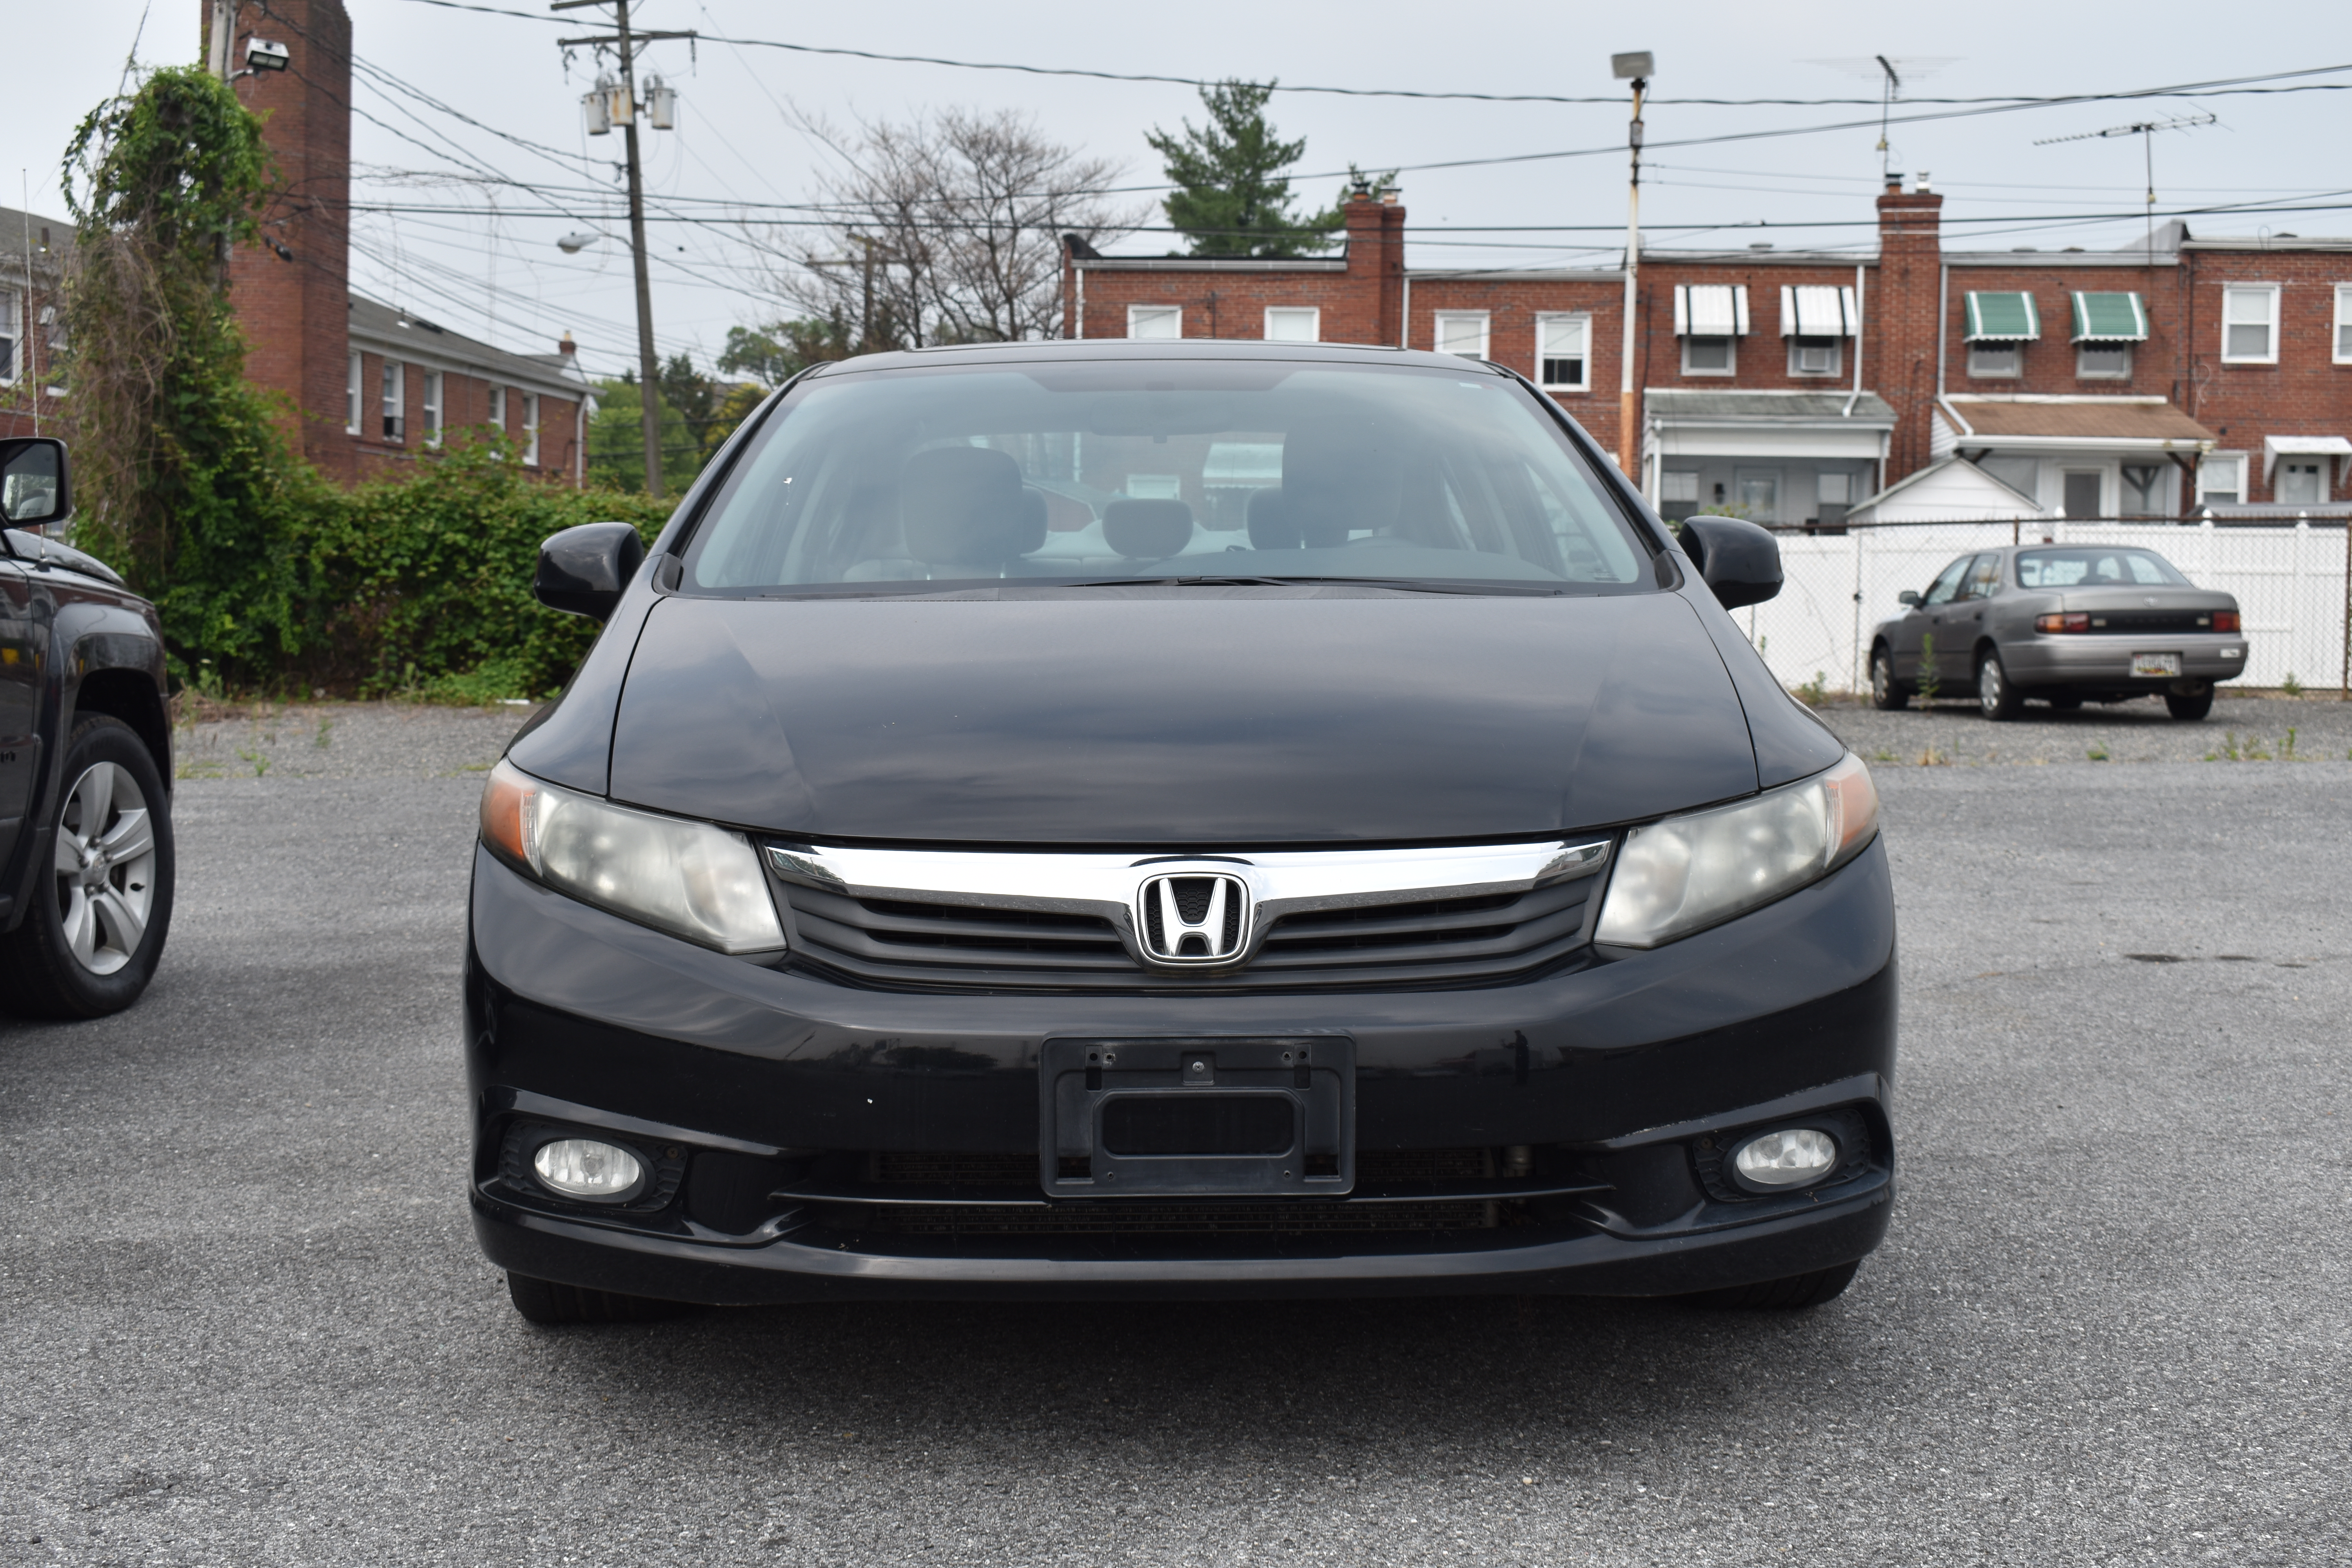 Honda Civic 2012 image